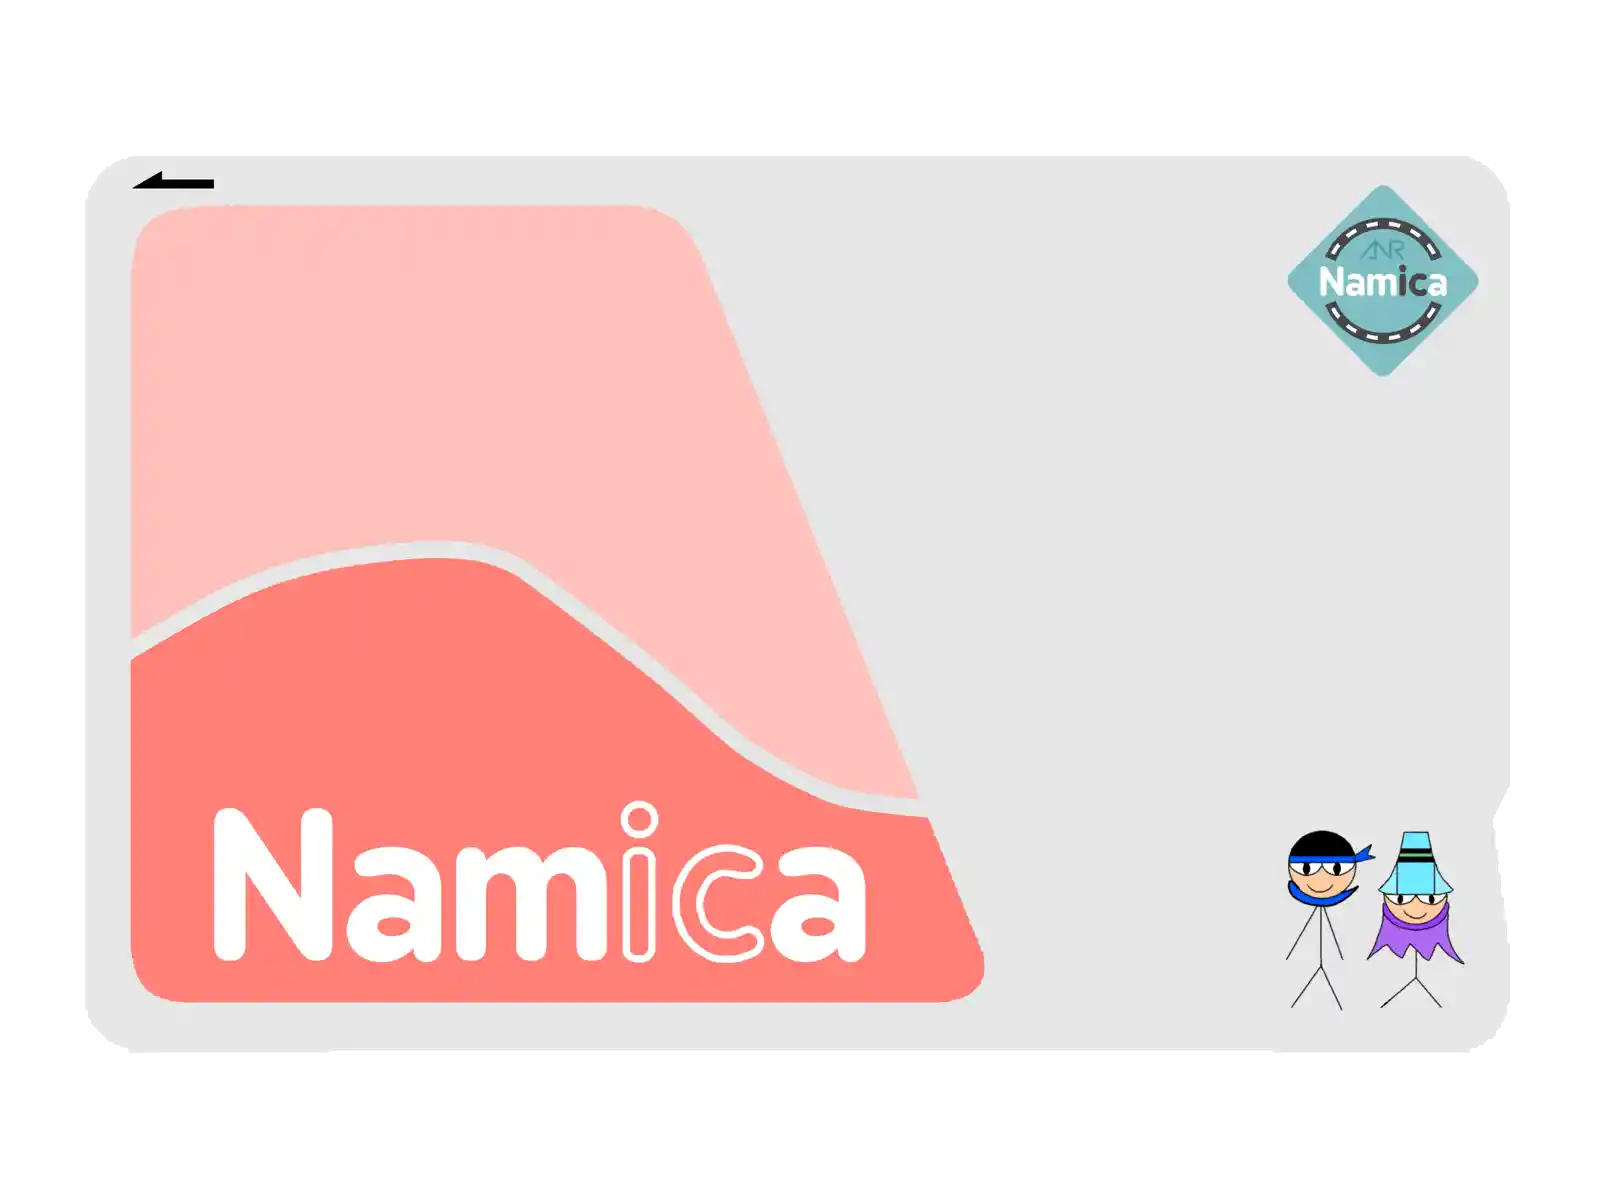 Namica-02.png